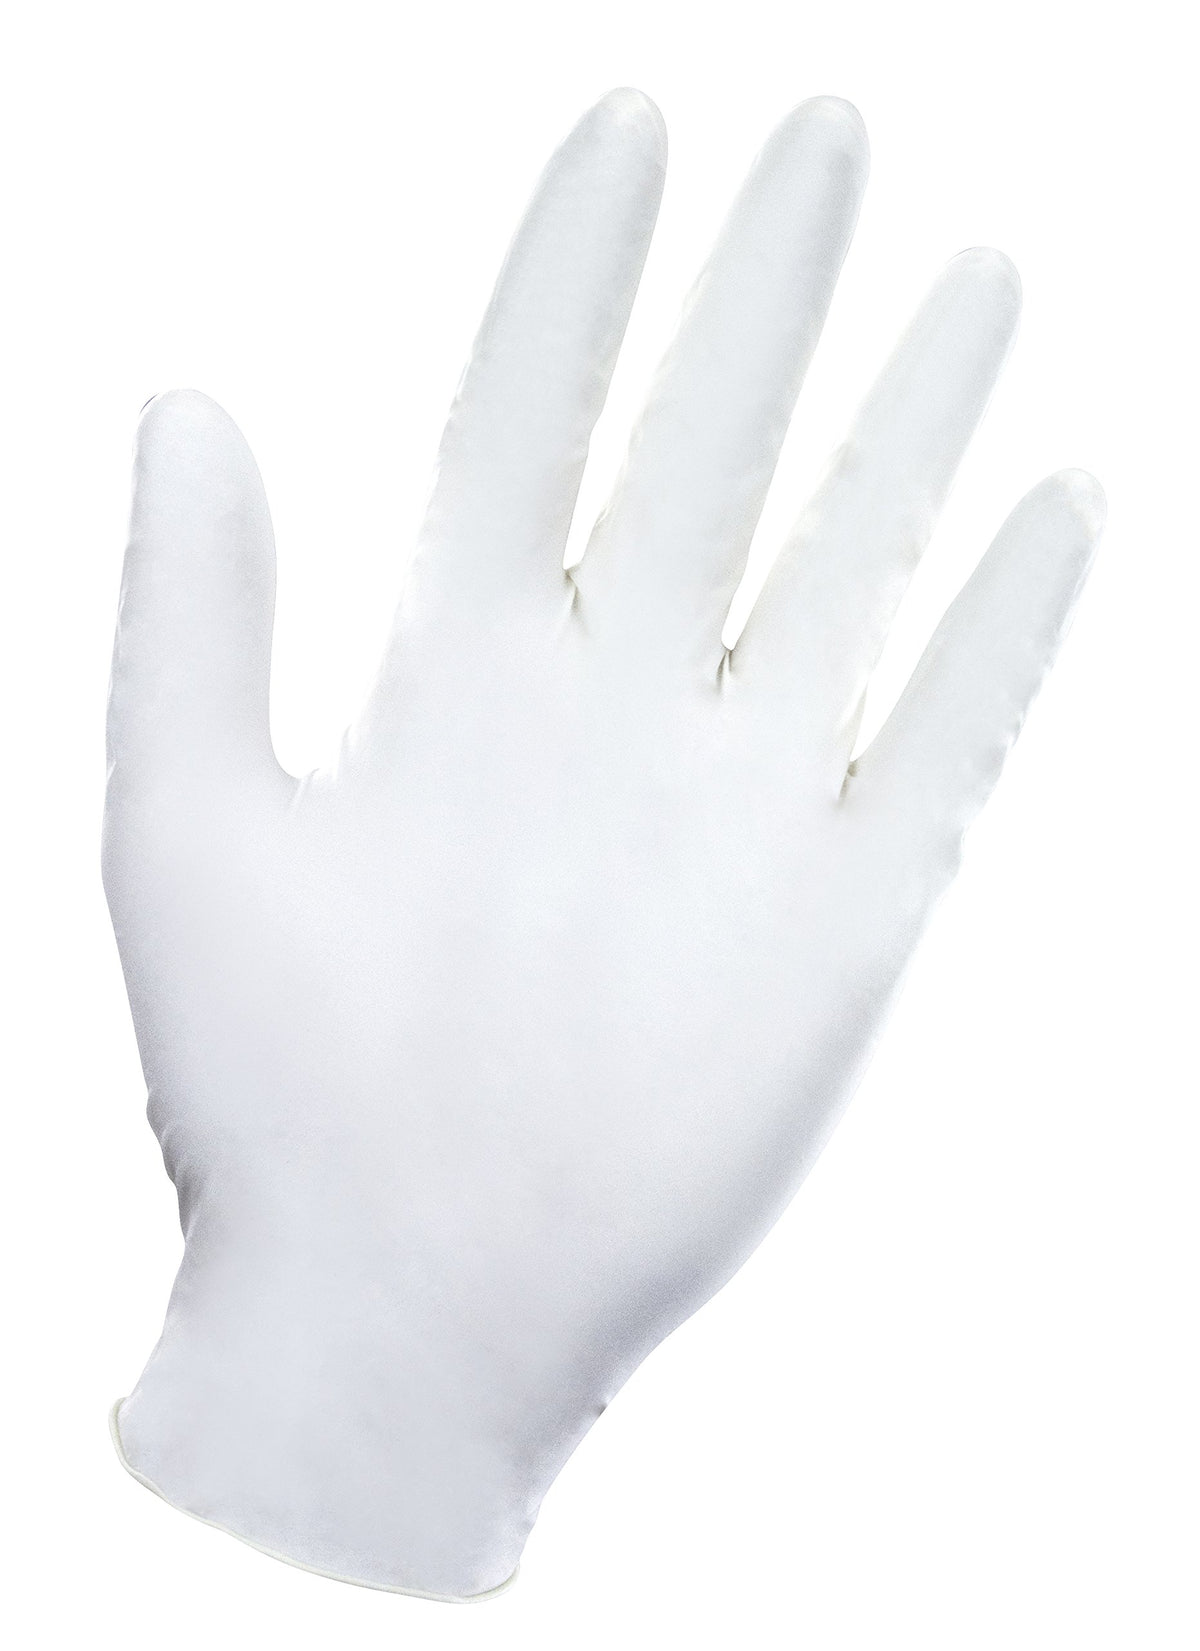 SAS Safety Derma-Defender Nitrile Powder Free Disposable Glove XL